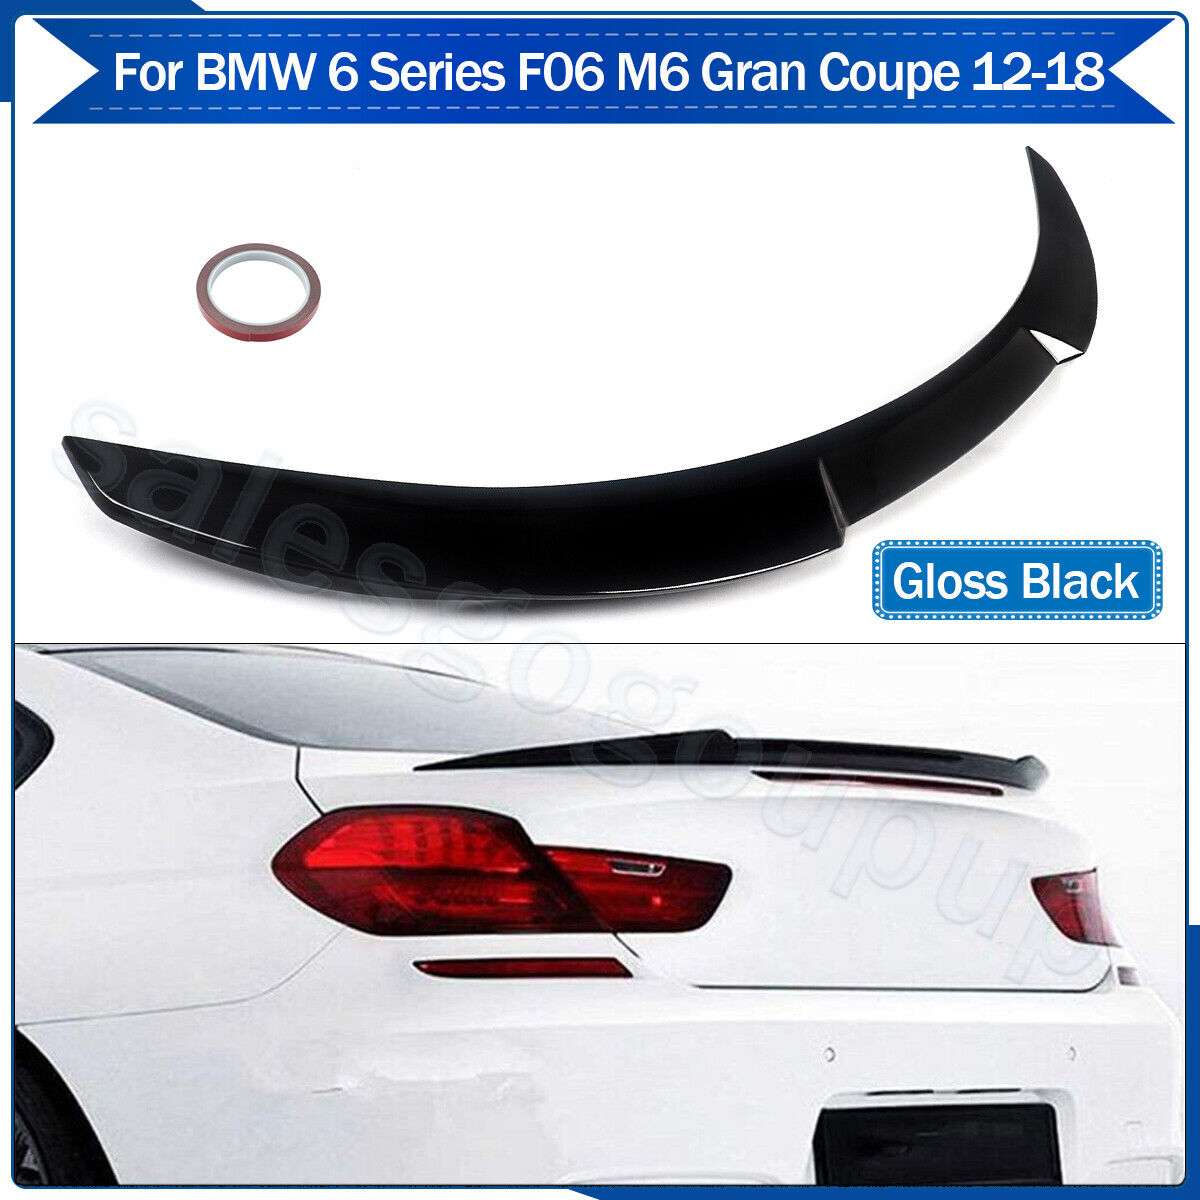 Fits 2012-2018 BMW 6 Series F06 640i 650i M6 Rear Spoiler Trunk Wing Gloss Black